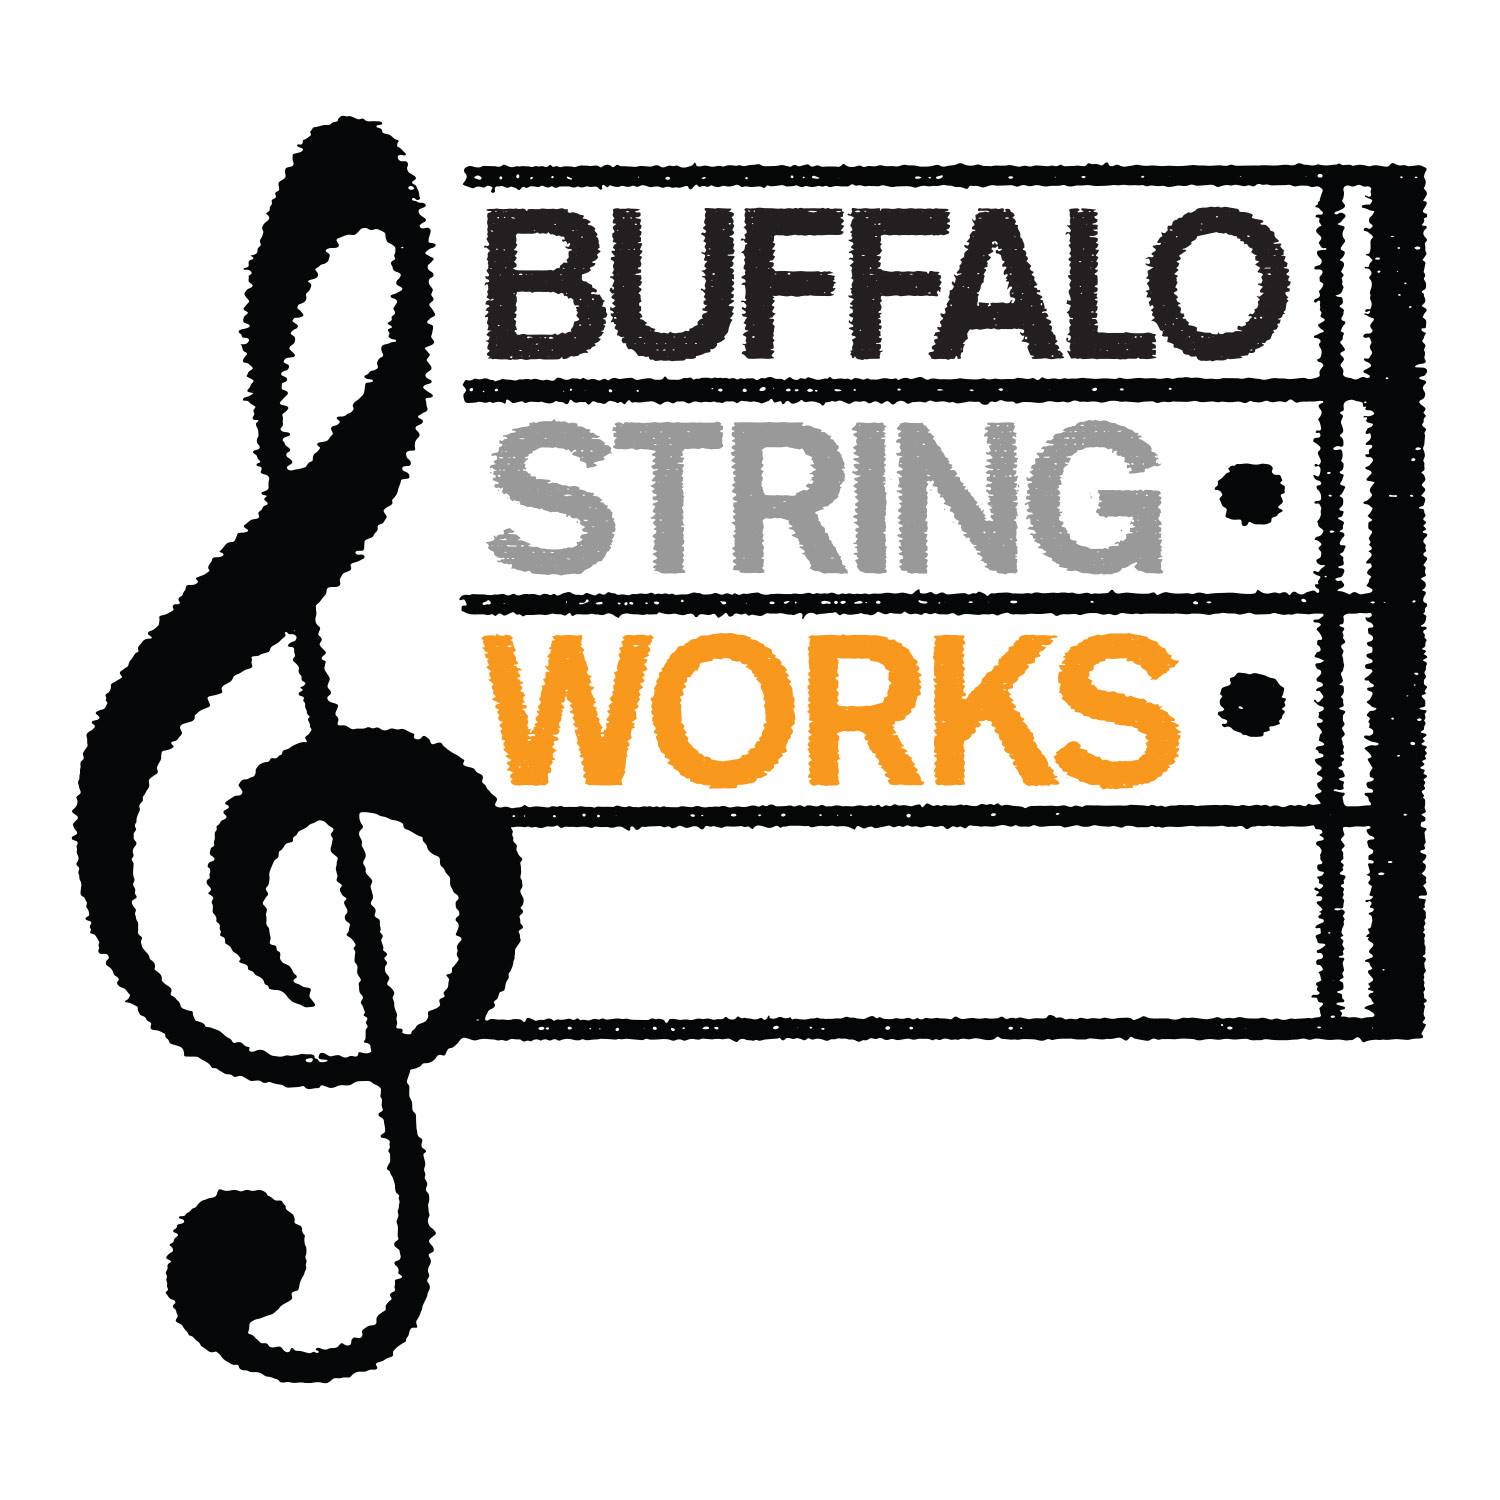 Buffalo String Works - Buffalo Rising